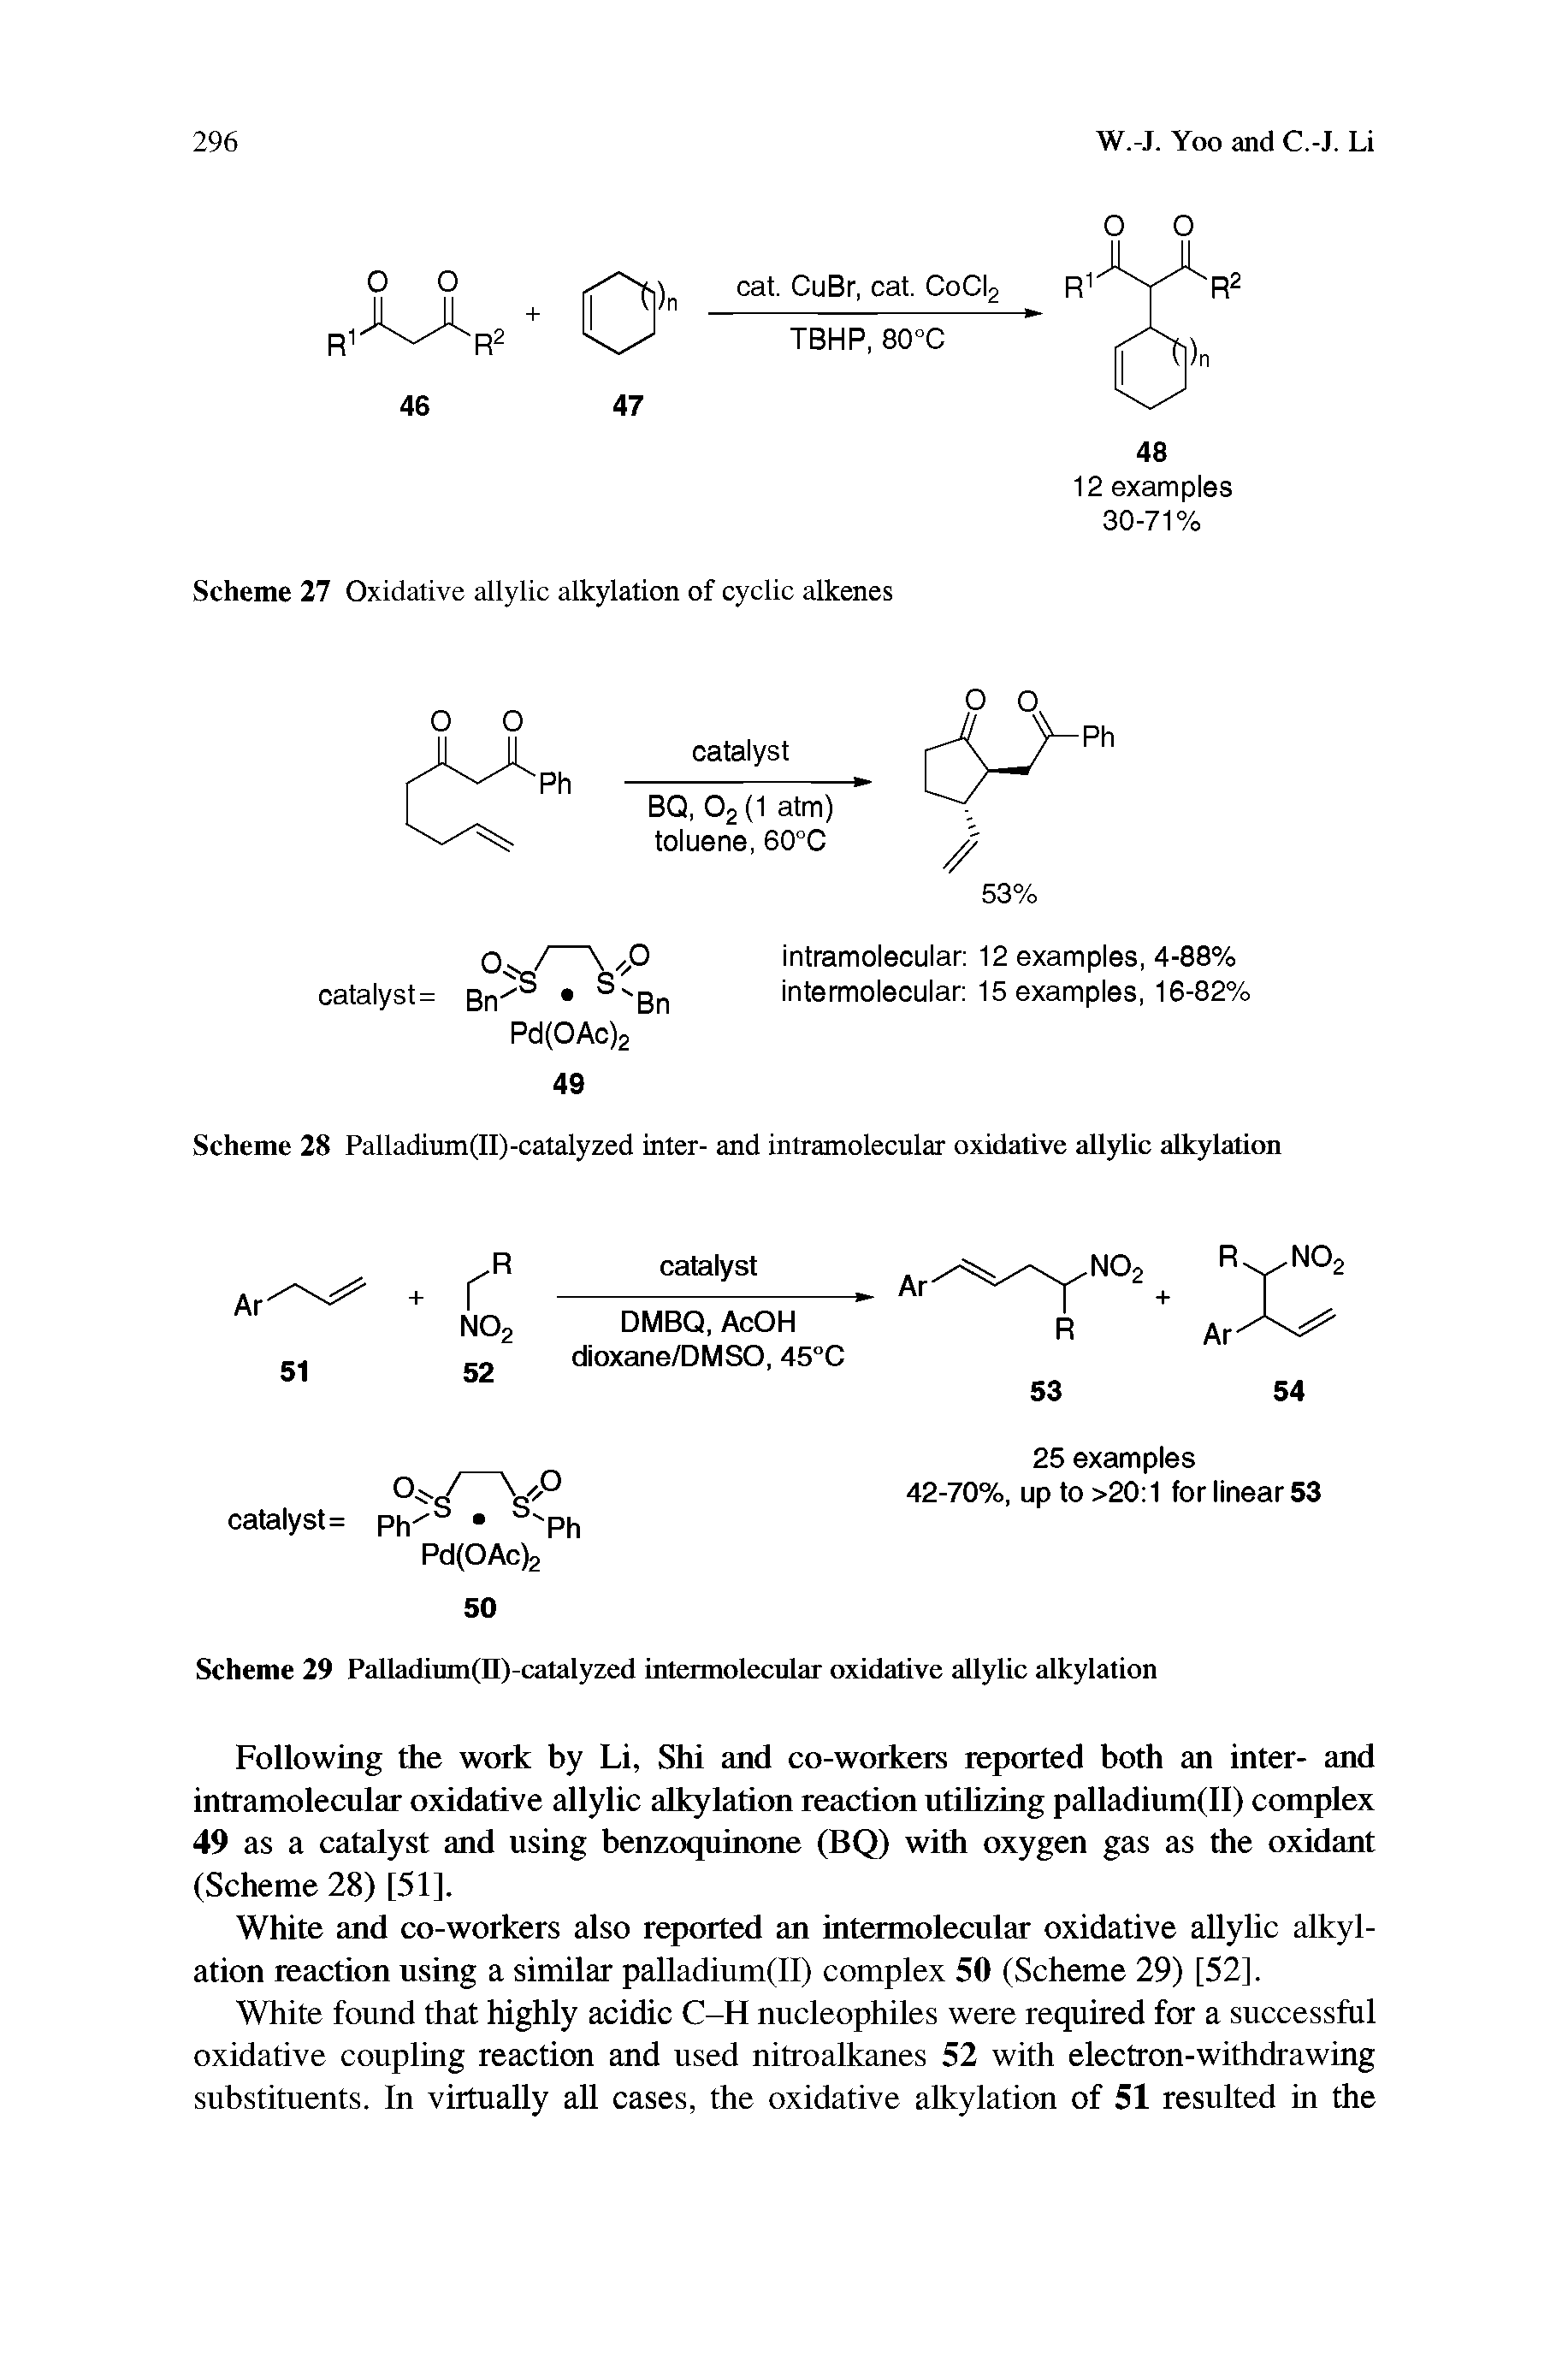 Scheme 28 Palladium(II)-catalyzed inter- and intramolecular oxidative allylic alkylation...